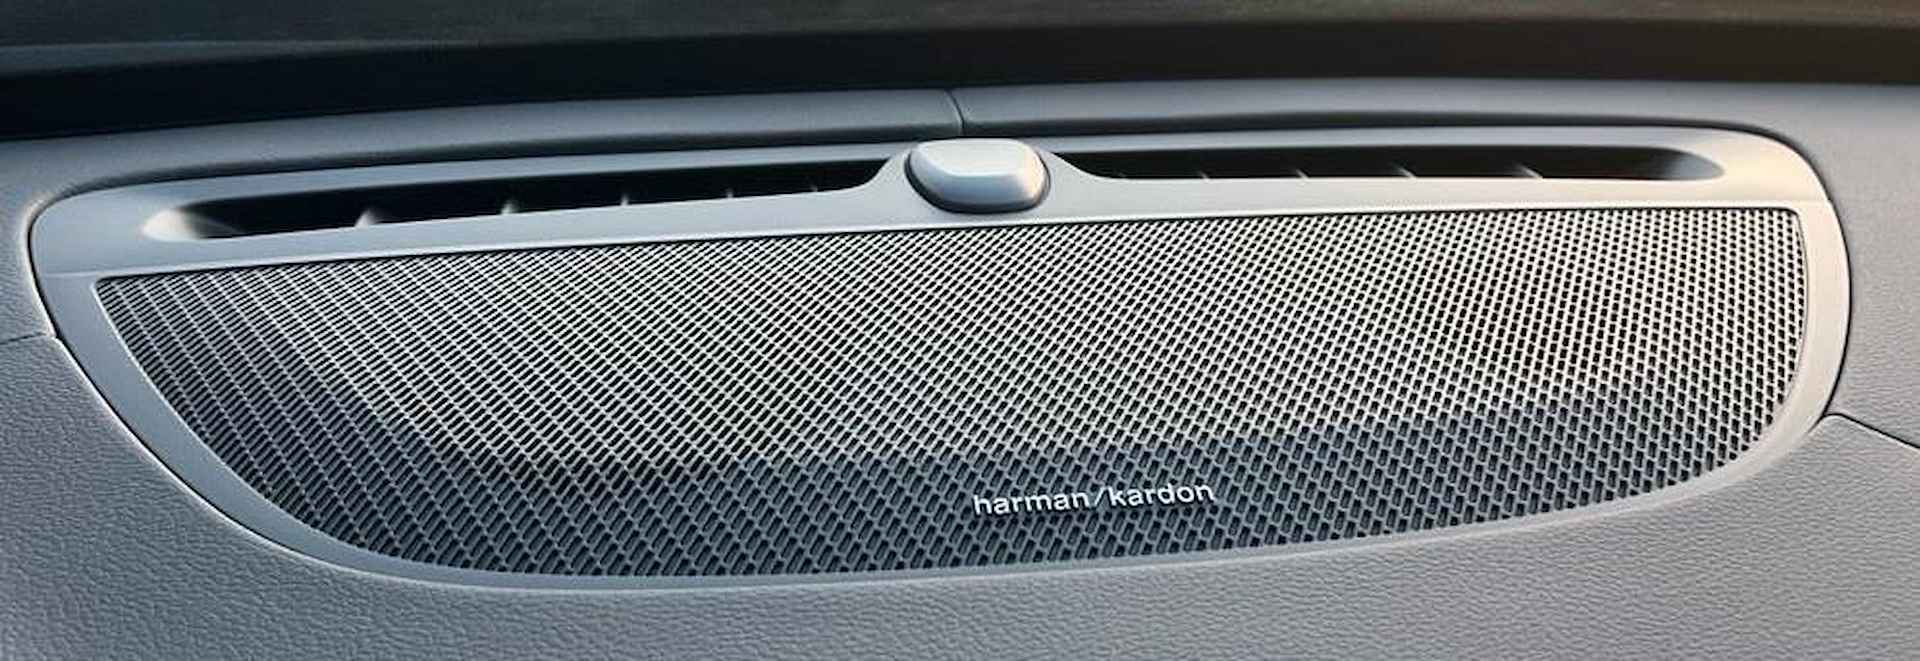 Volvo XC90 2.0 B5 AWD Inscription Blond Leder - Panorama dak - Harrman Kardon audio - 23/33